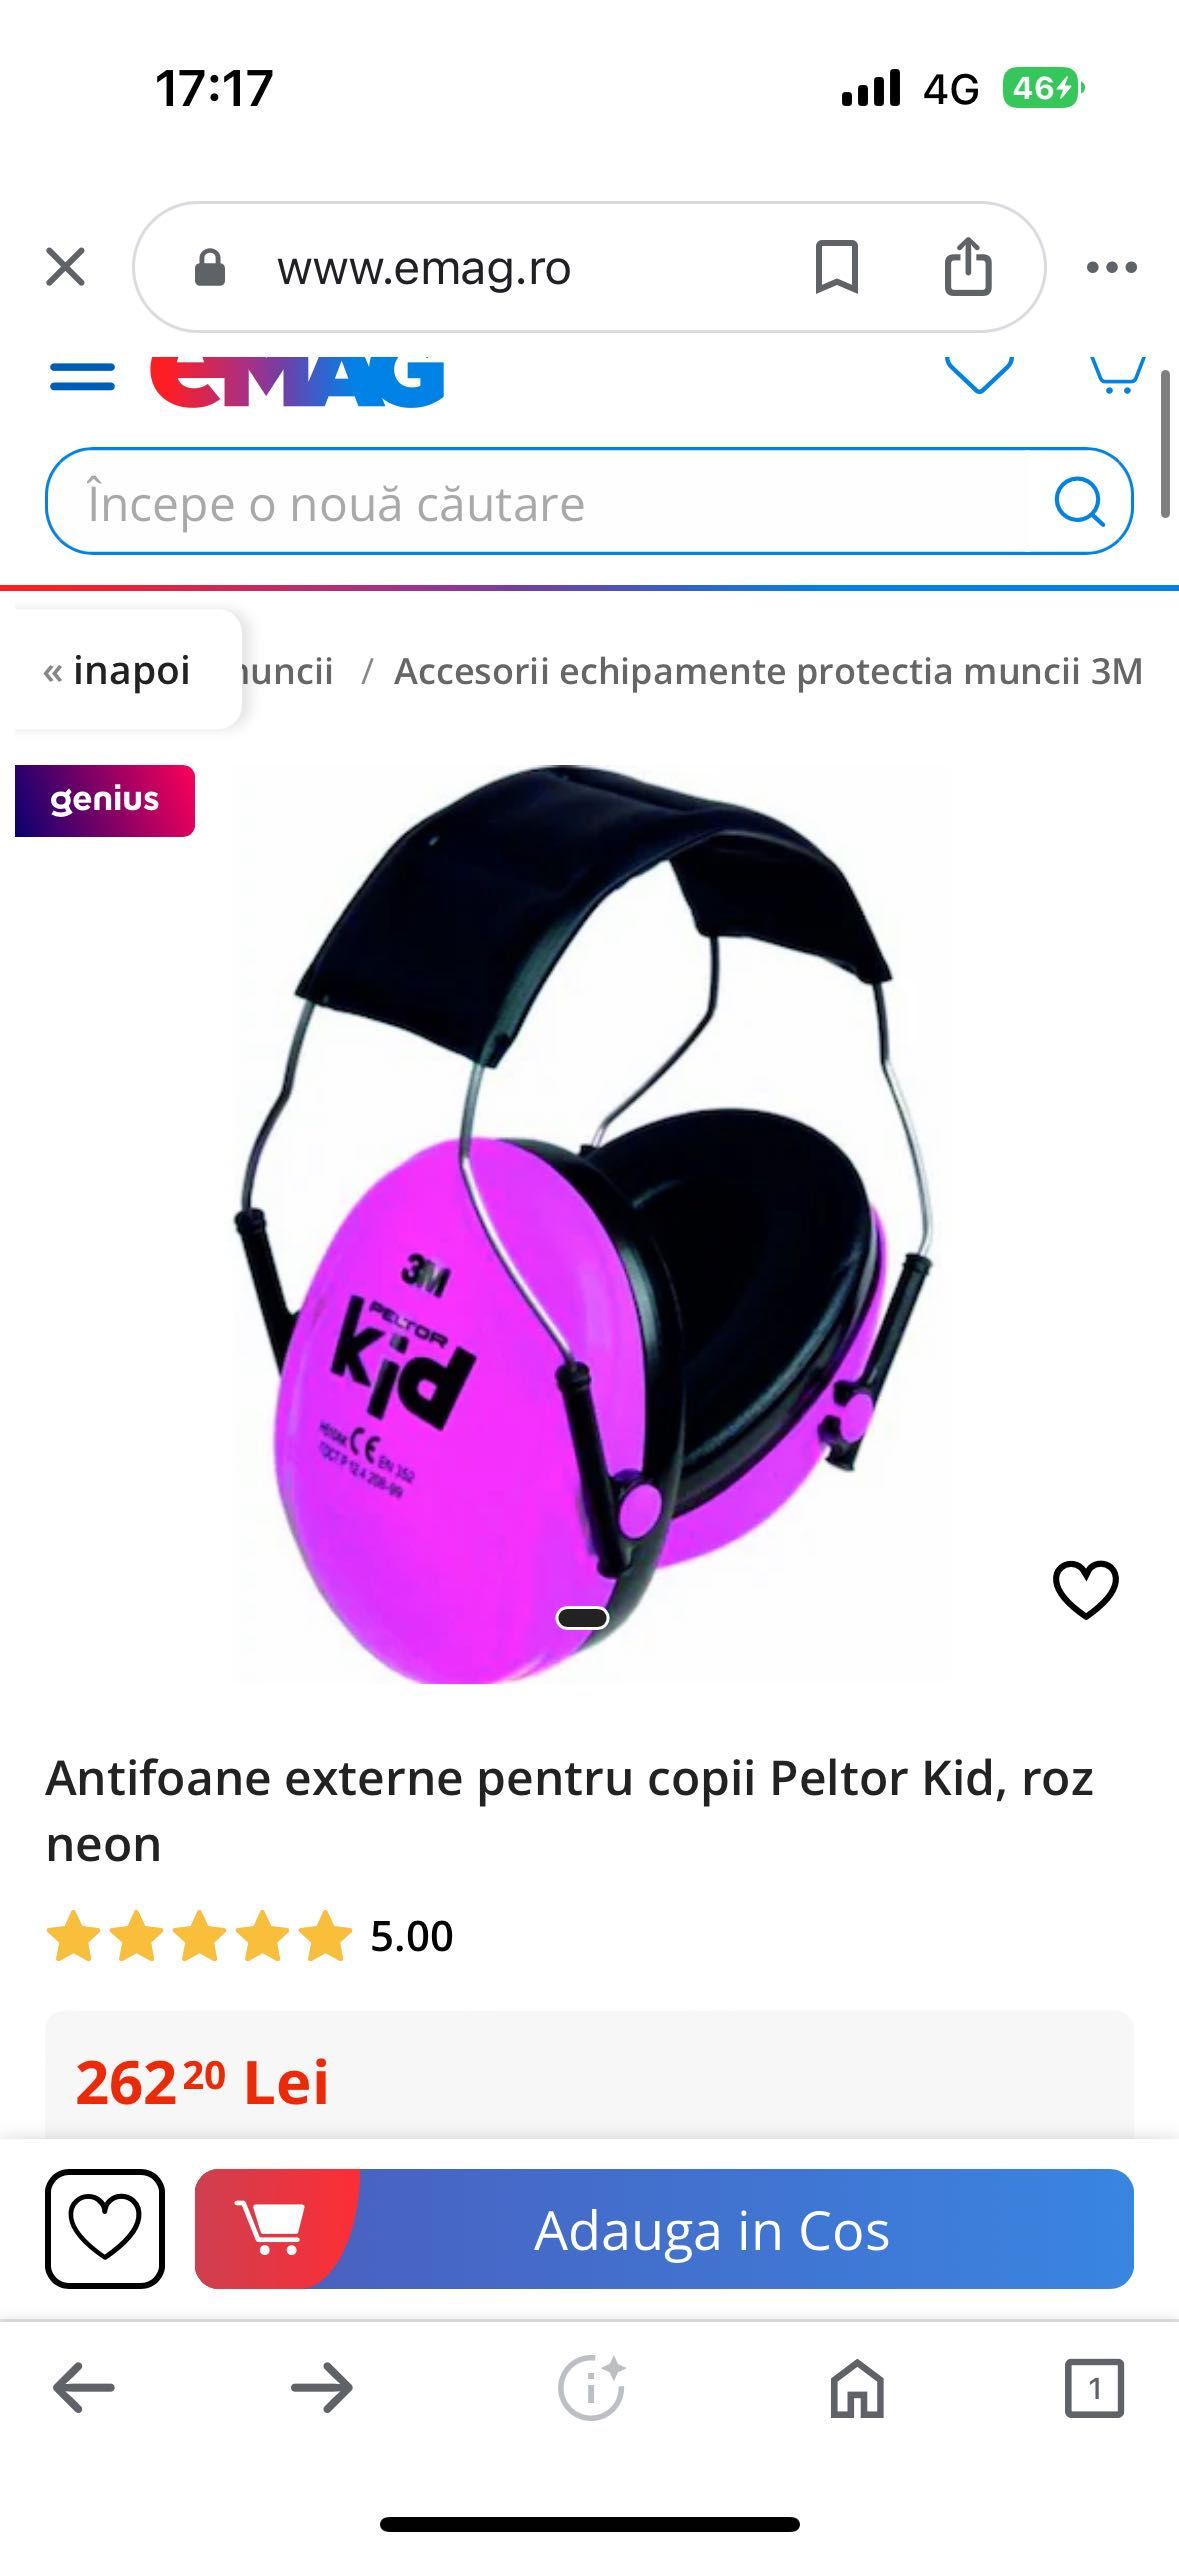 Antifoane externe pentru copii Peltor Kid, roz